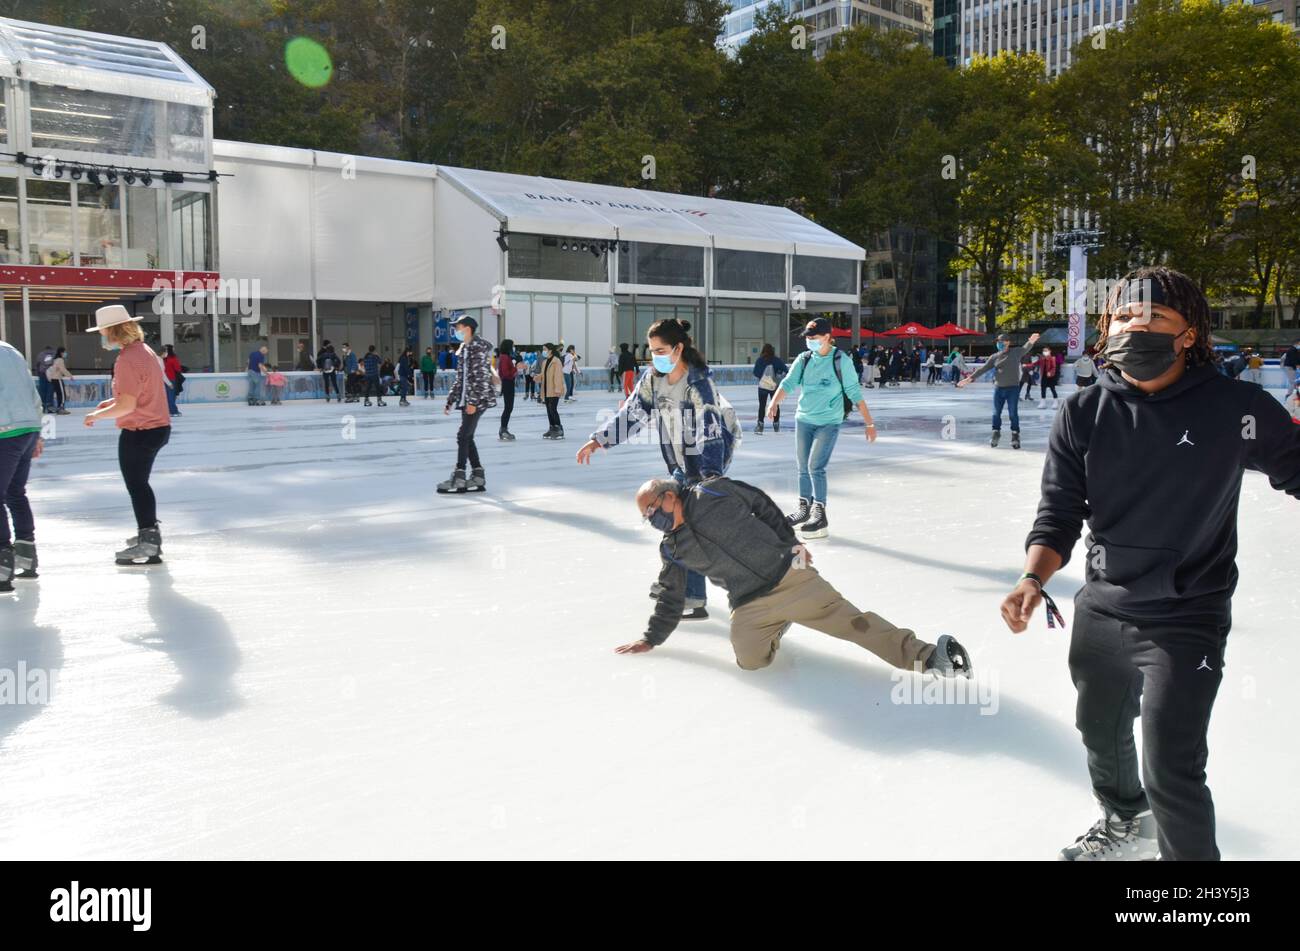 Ice skating rink in Bryant Park in New York City on October 30, 2021. Stock Photo